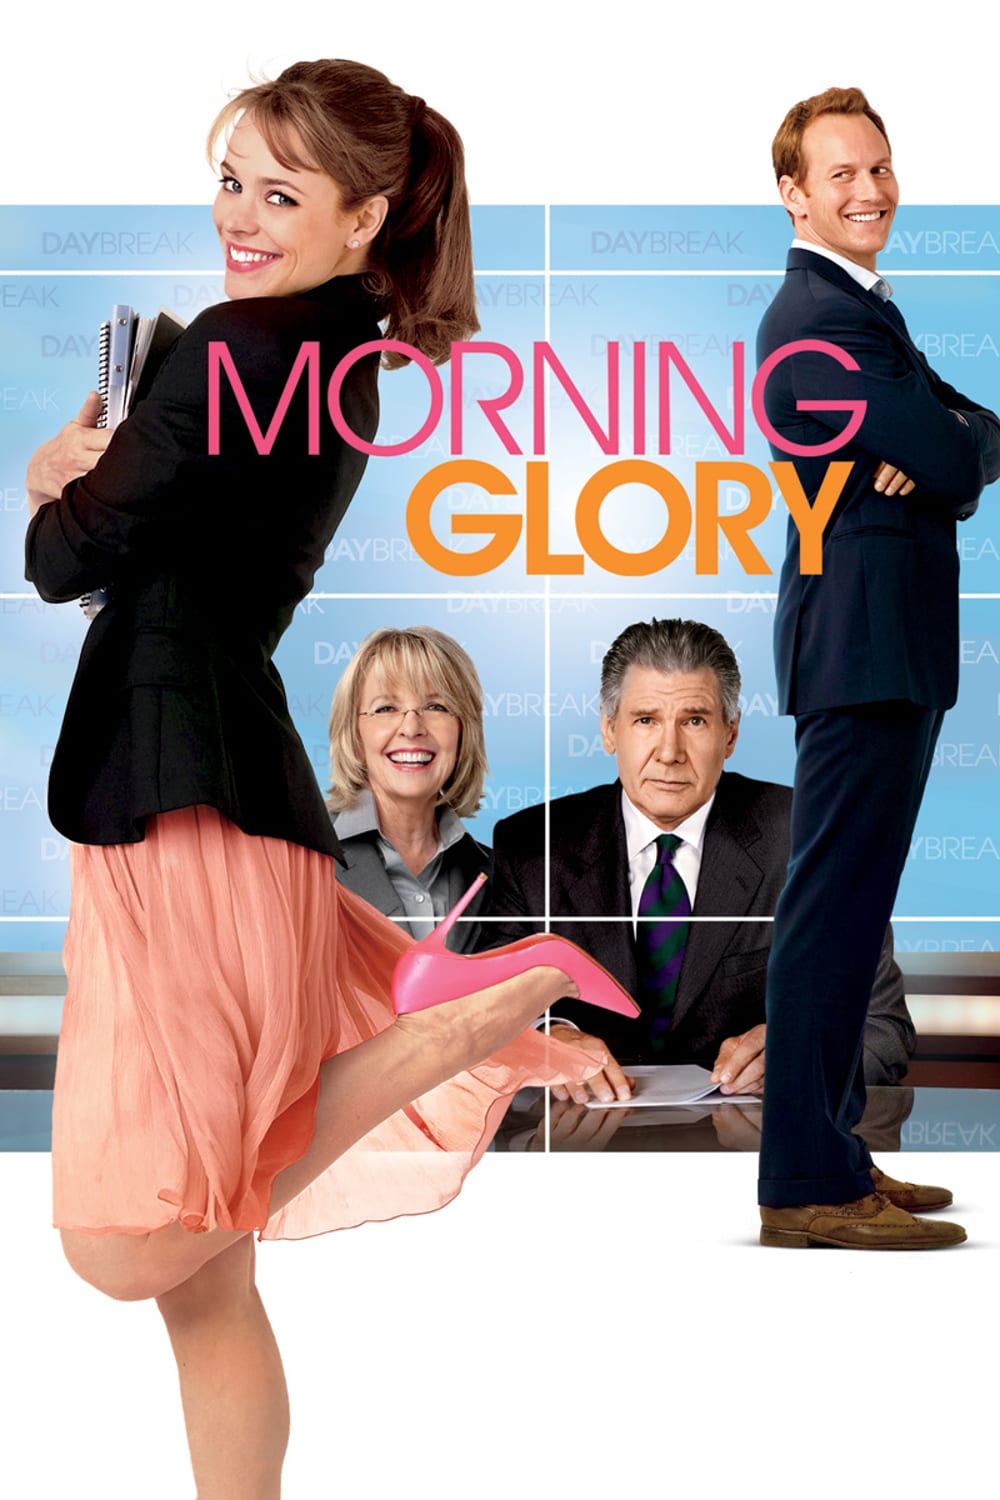 Plakat von "Morning Glory"